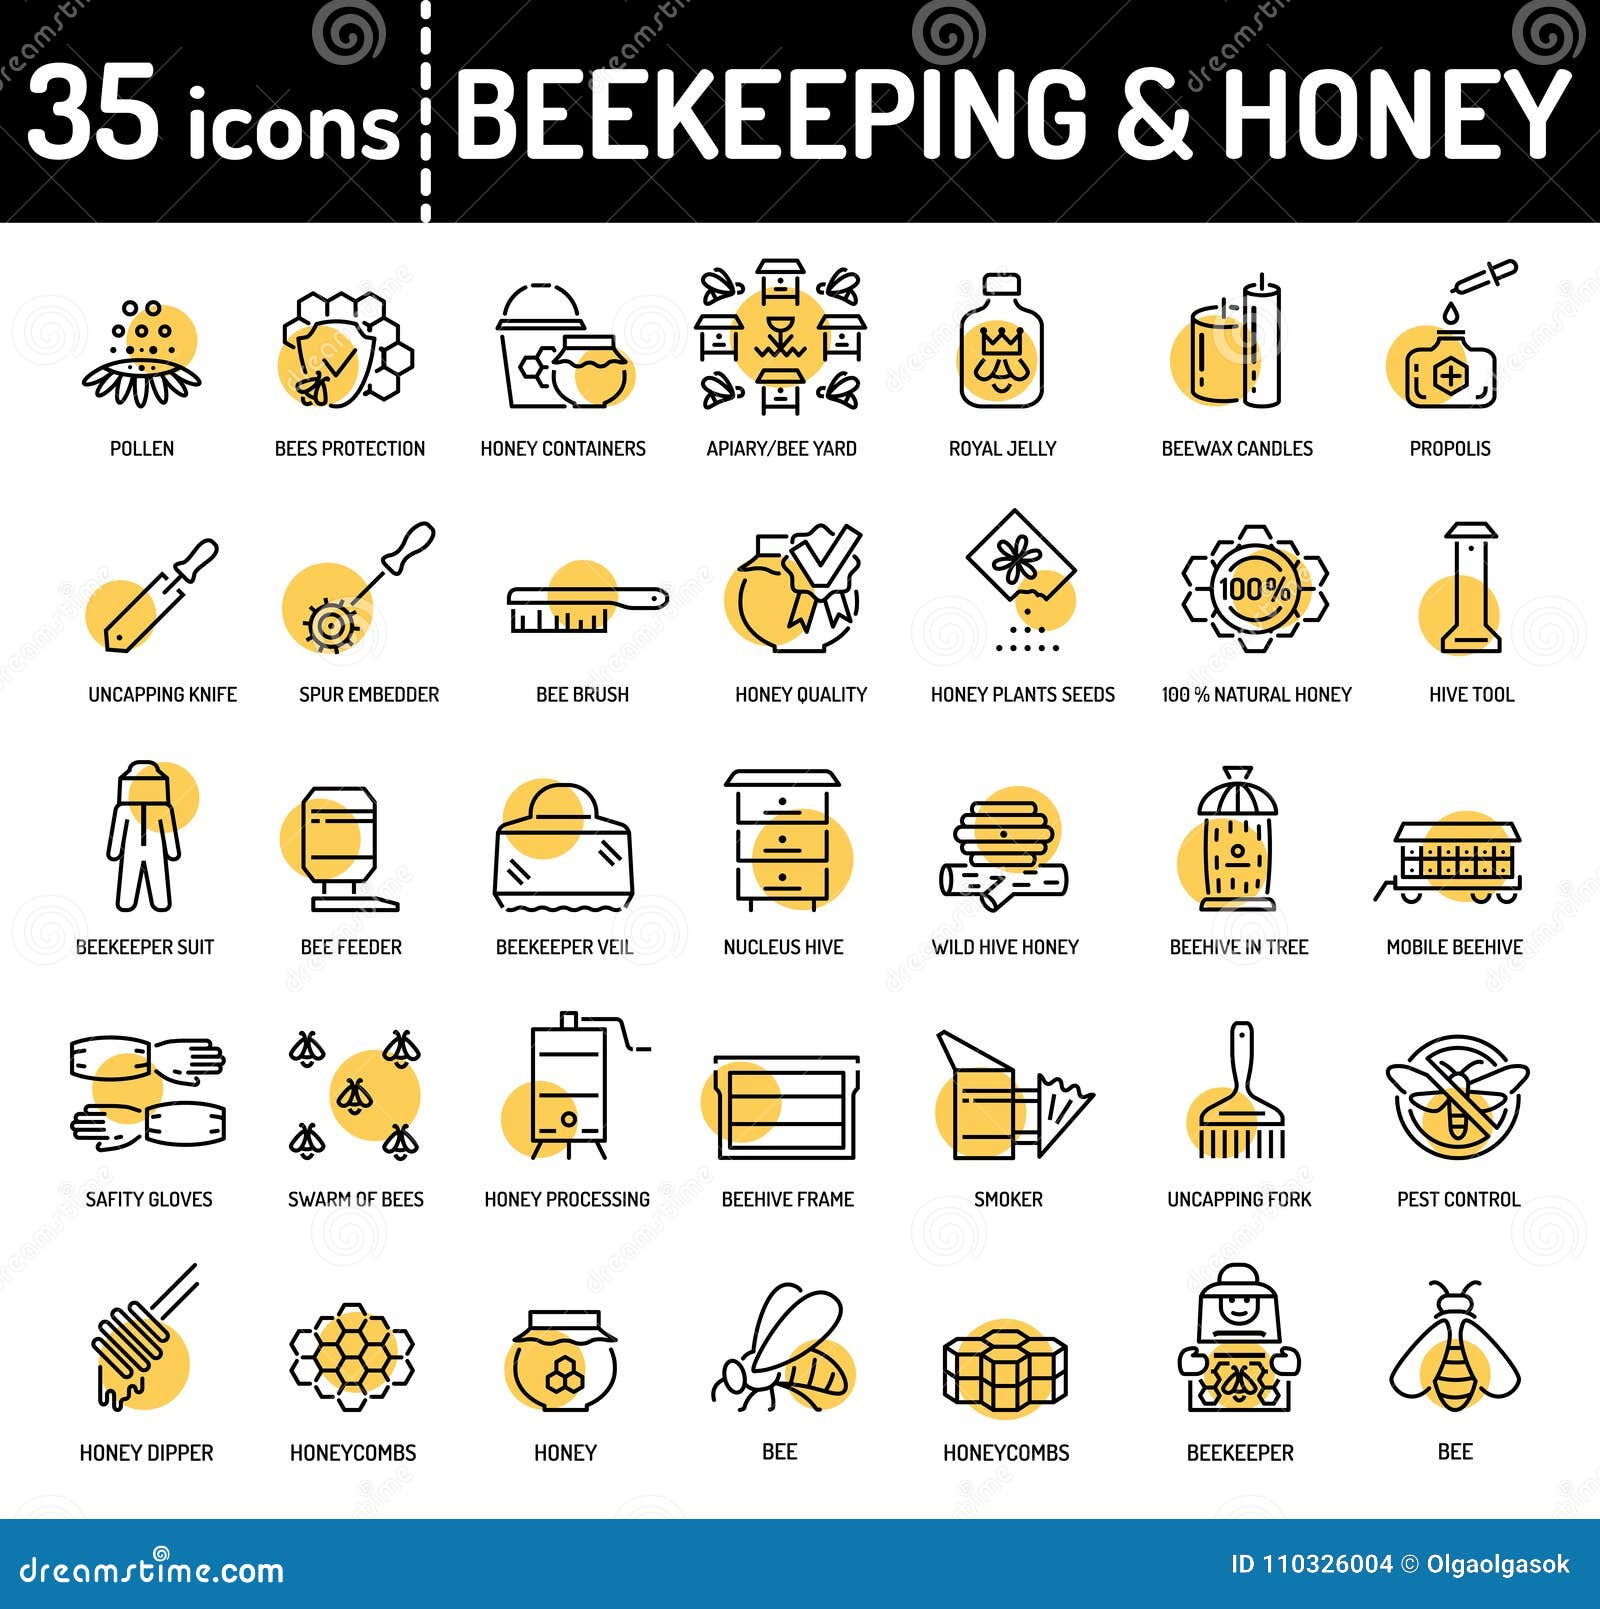 Beekeeper - Free user icons